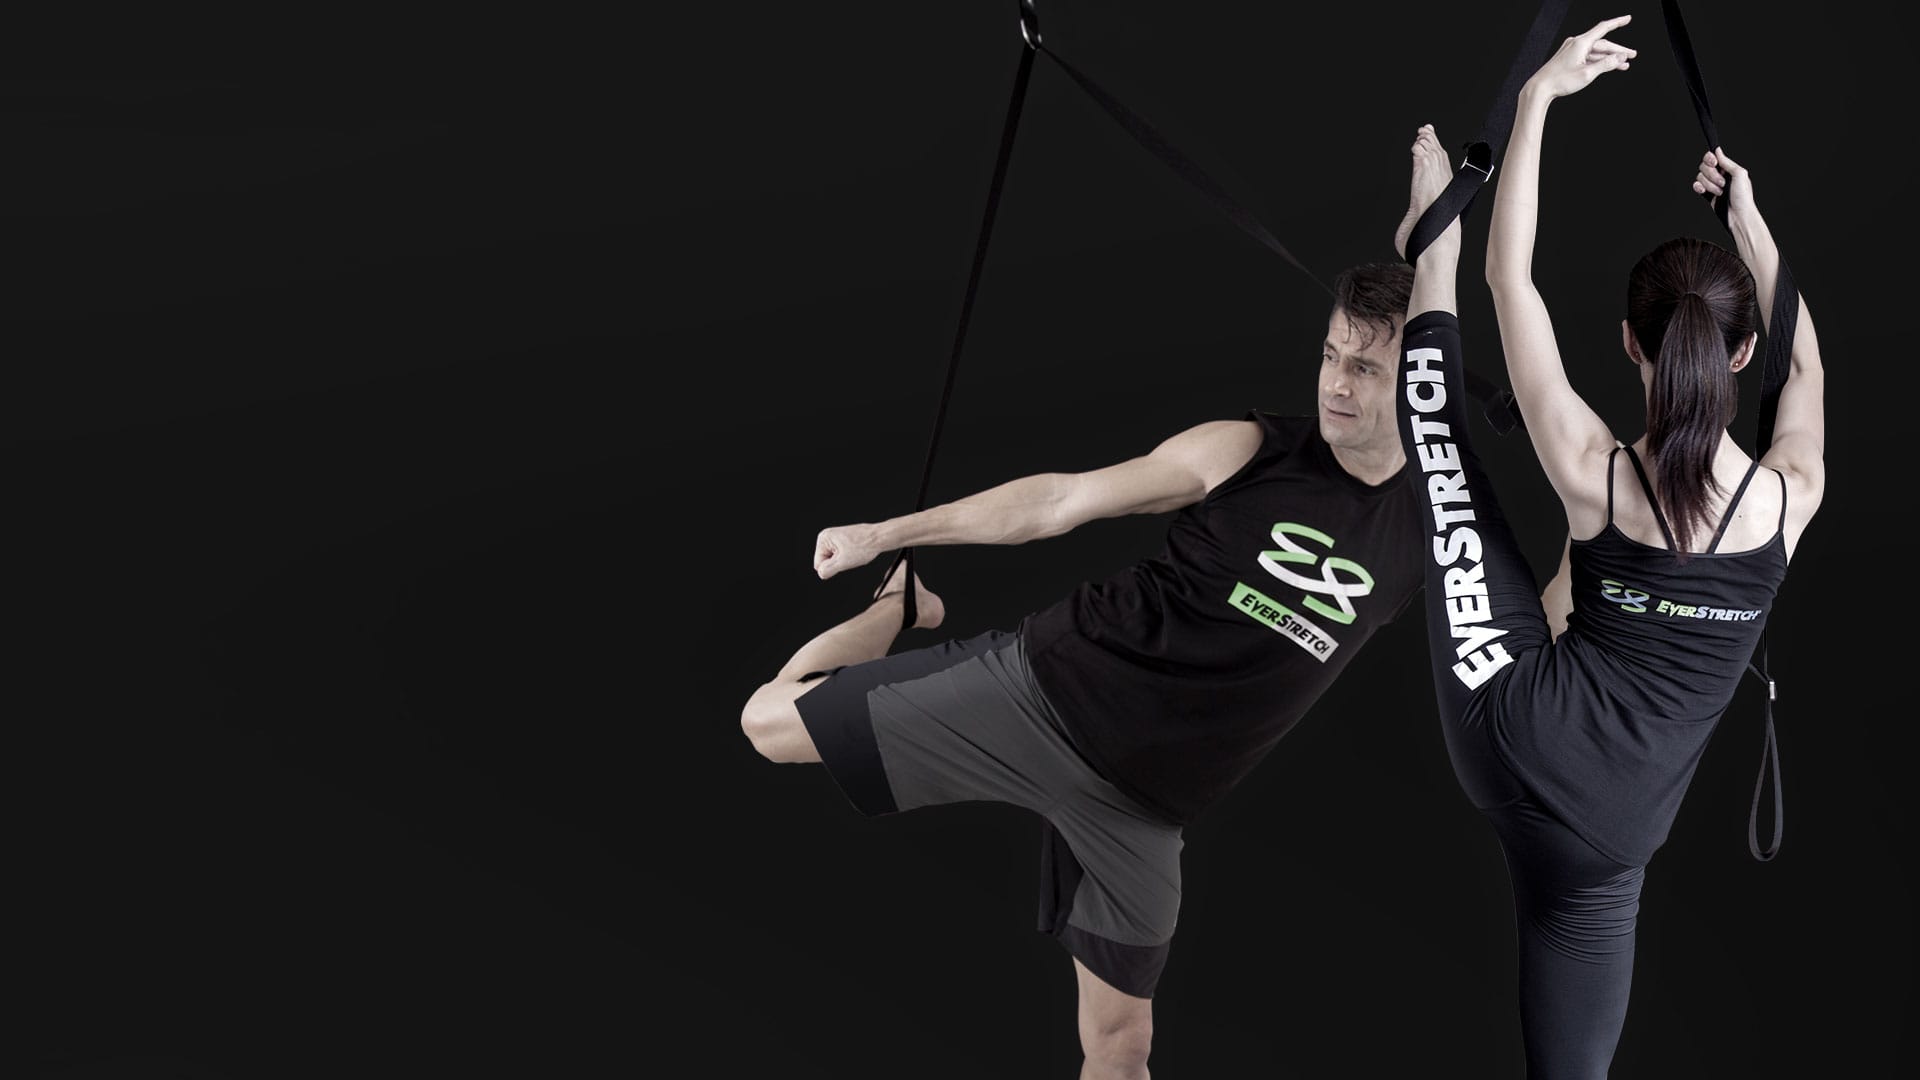 EverStretch - Premium Stretching Equipment for Athletes